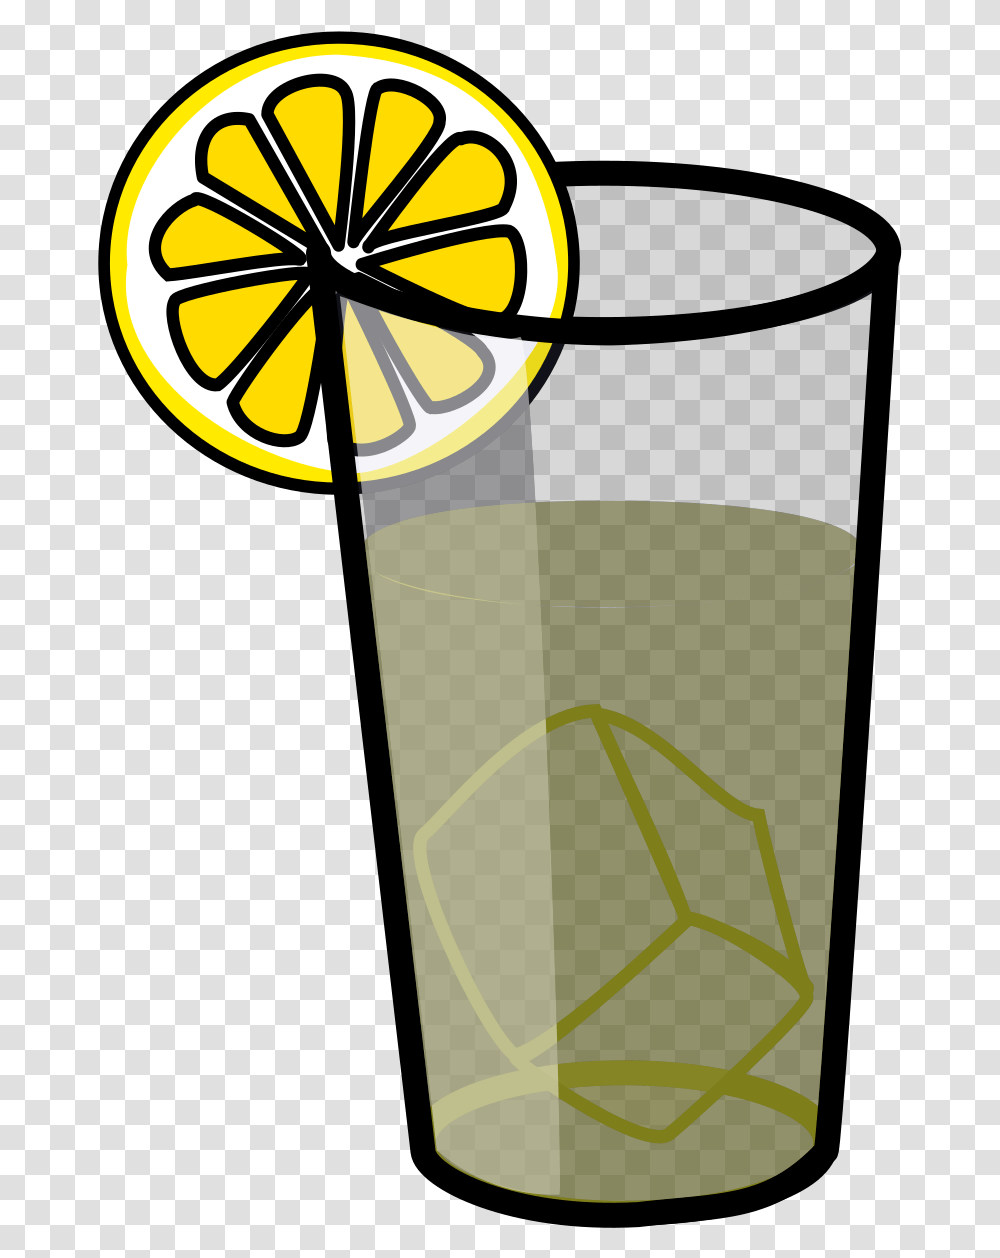 Cartoon Glass Of Lemonade, Beverage, Drink, Alcohol Transparent Png